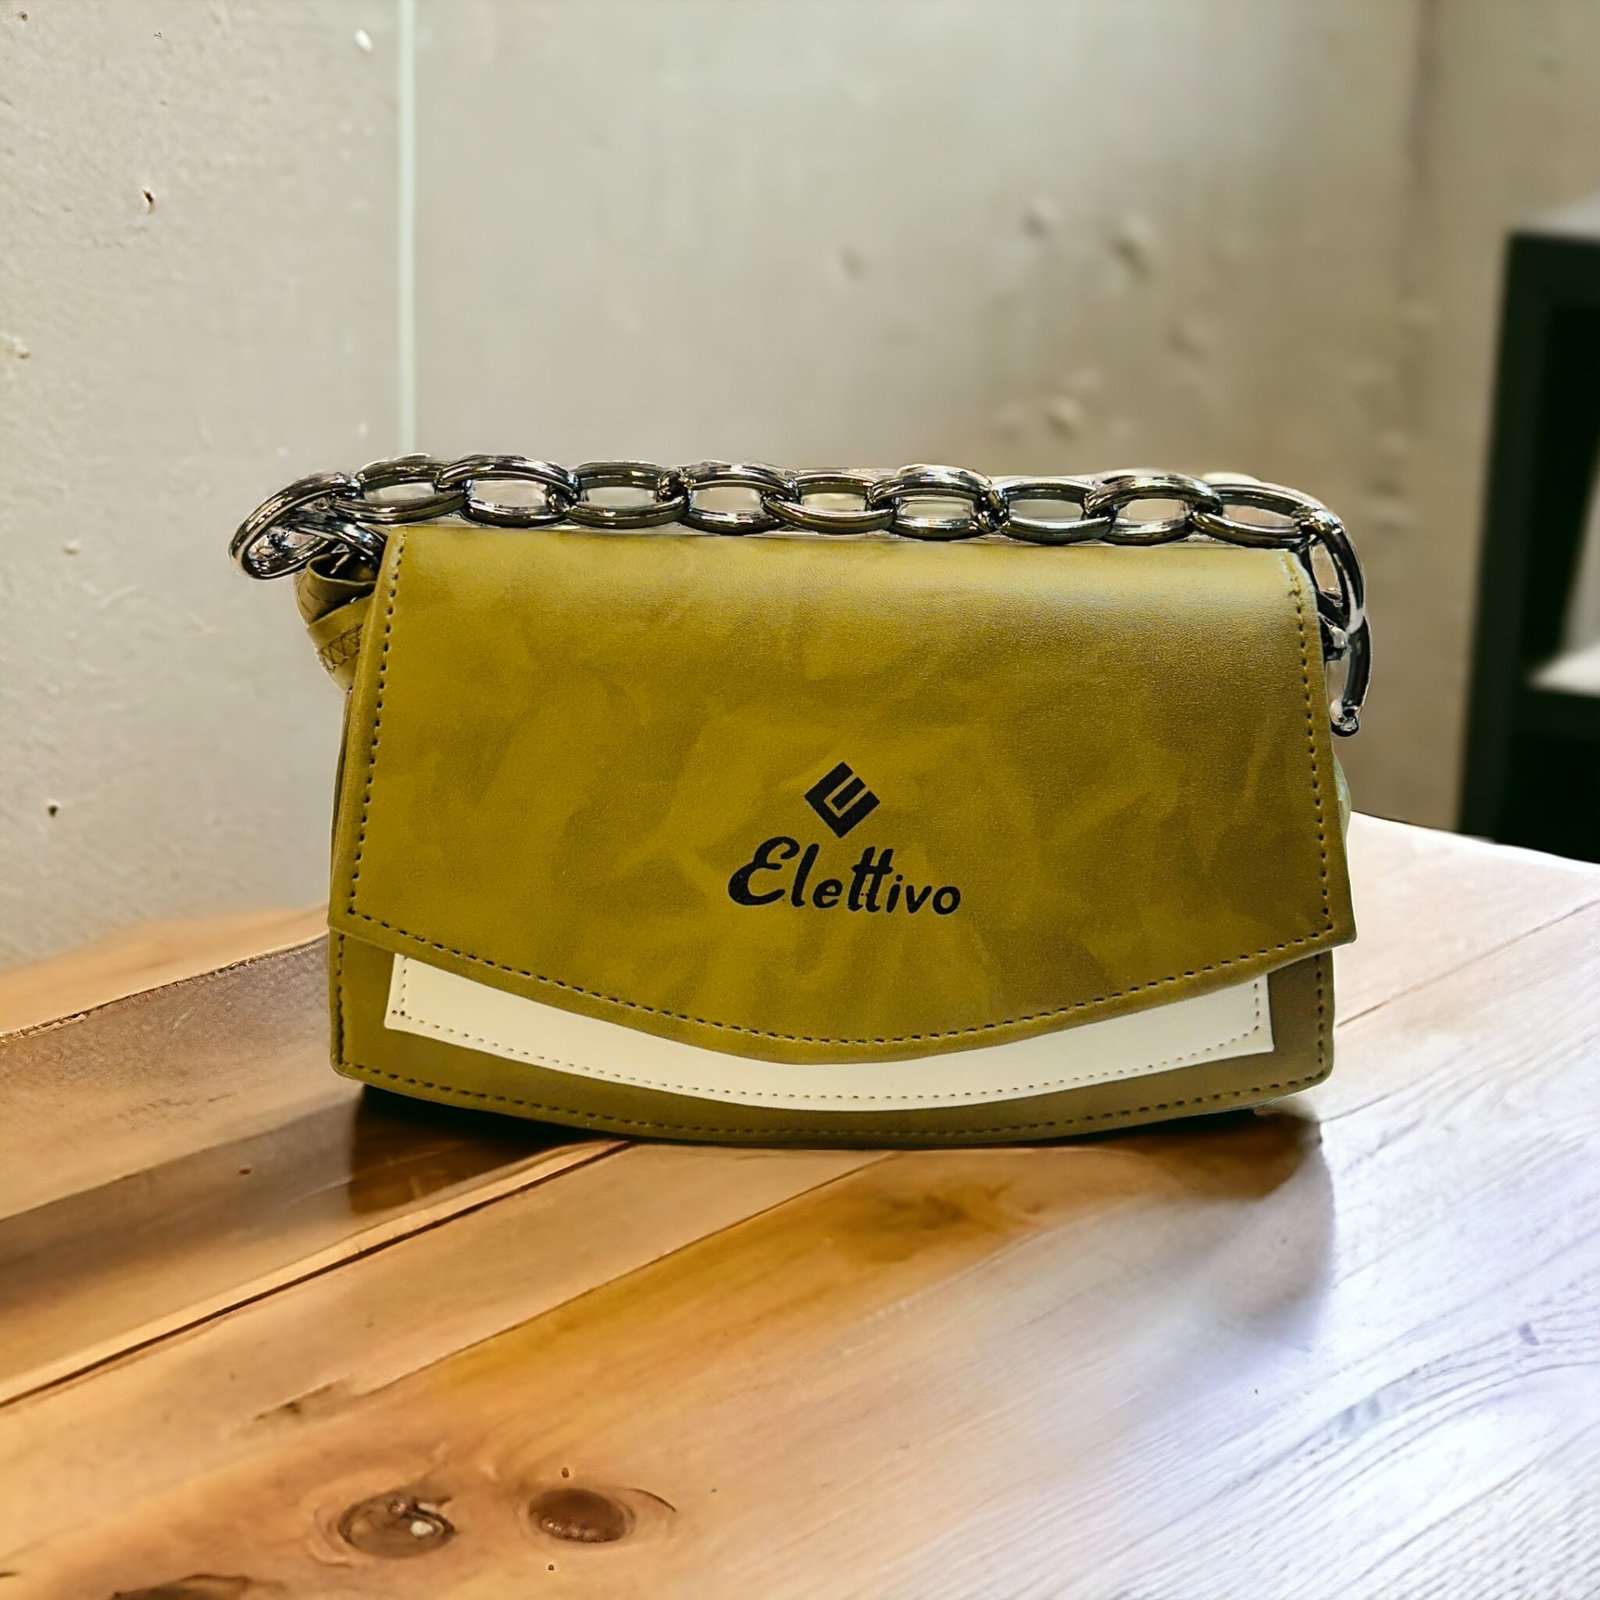 Urban Expression Handbag Mint Green color with shoulder strap Purse F | eBay